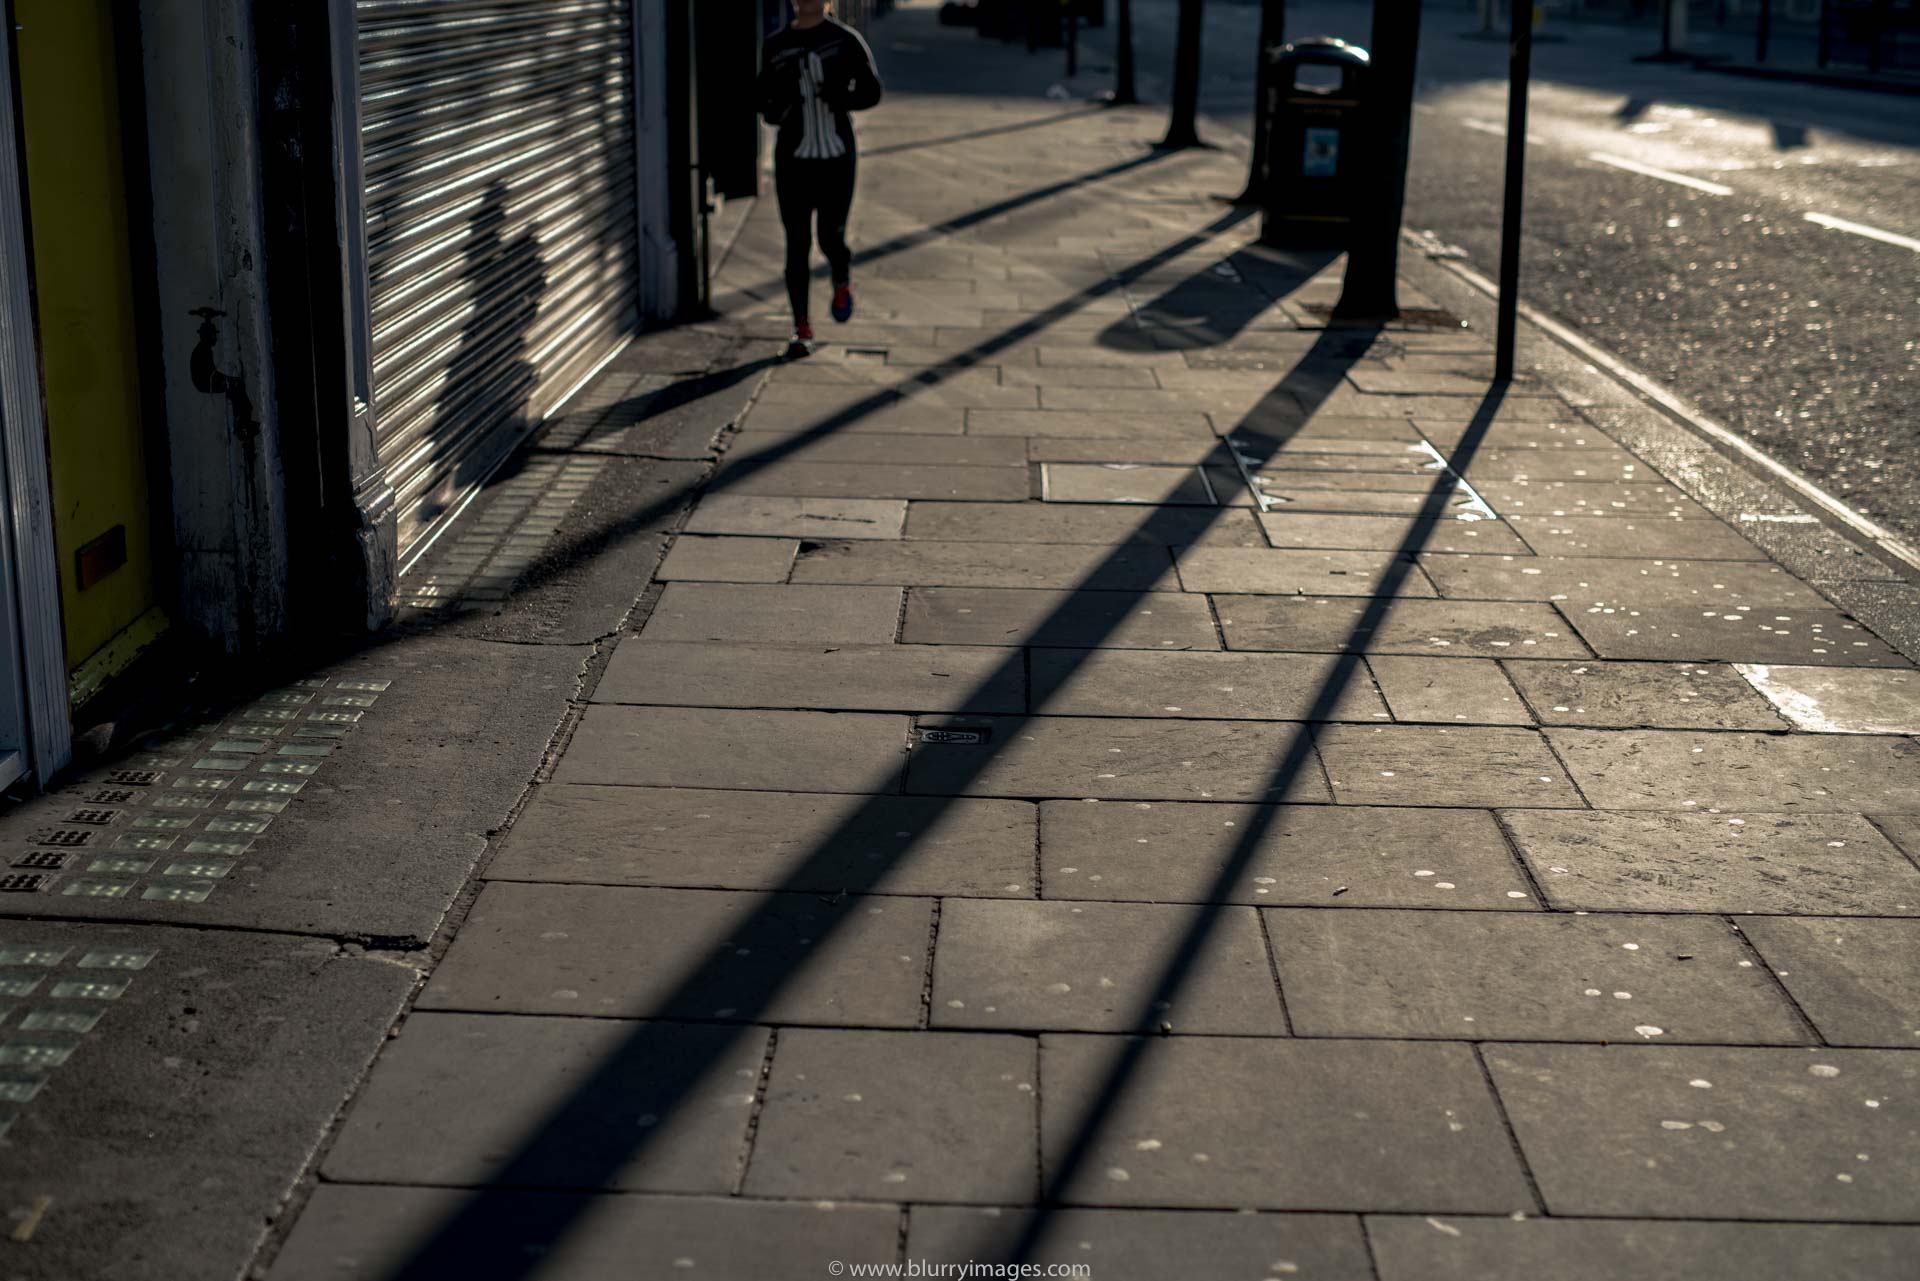 contrast, running woman, sun on pavement, pavement, sidewalk, rubbish, shop display,